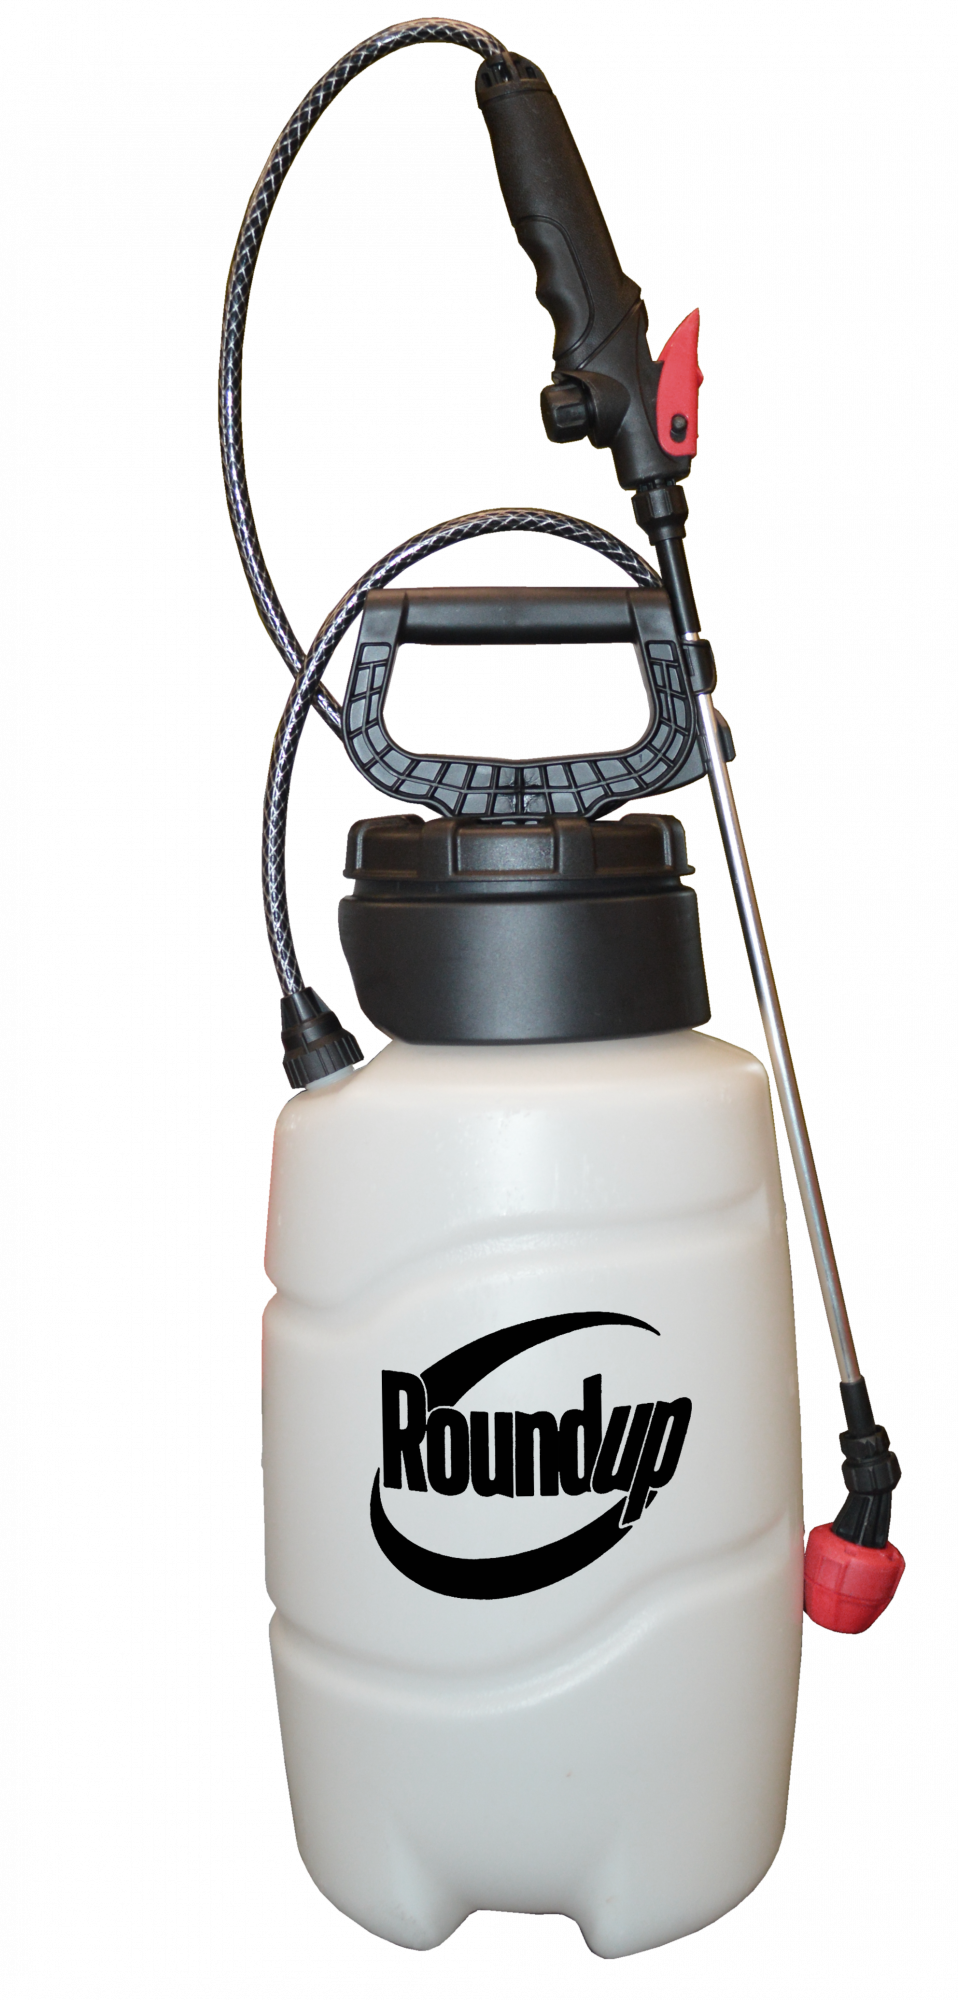 Roundup® 190459 2-Gallon Multi-Use Sprayer with 3-in-1 Nozzle